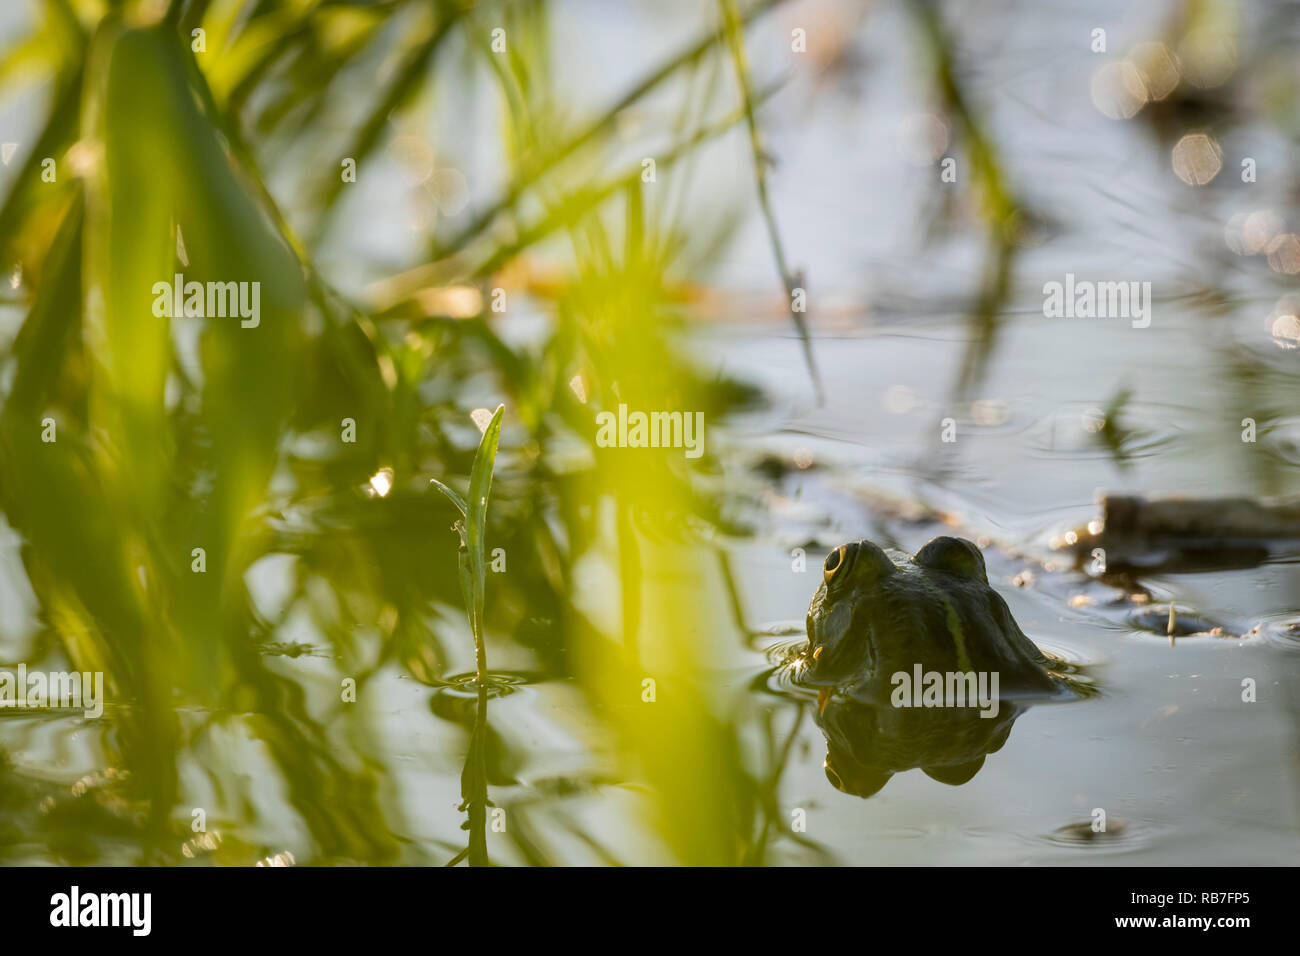 Marsh Frog (Pelophylax ridibundus) in pond habitat. Latvia. Stock Photo